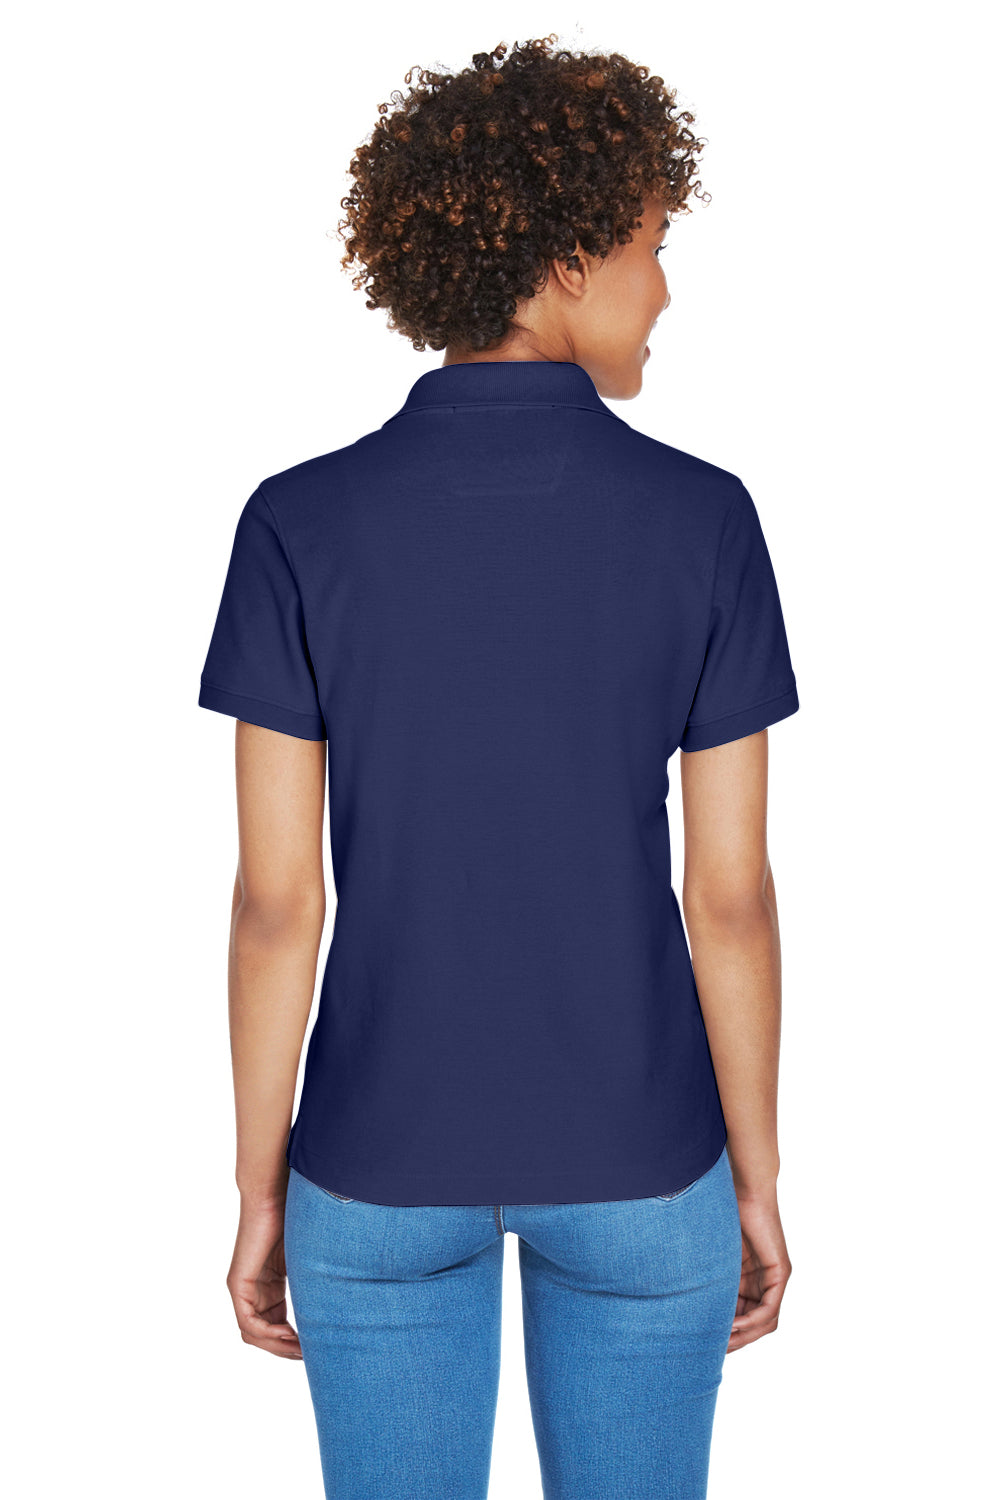 Devon & Jones D100W Womens Short Sleeve Polo Shirt Navy Blue Back